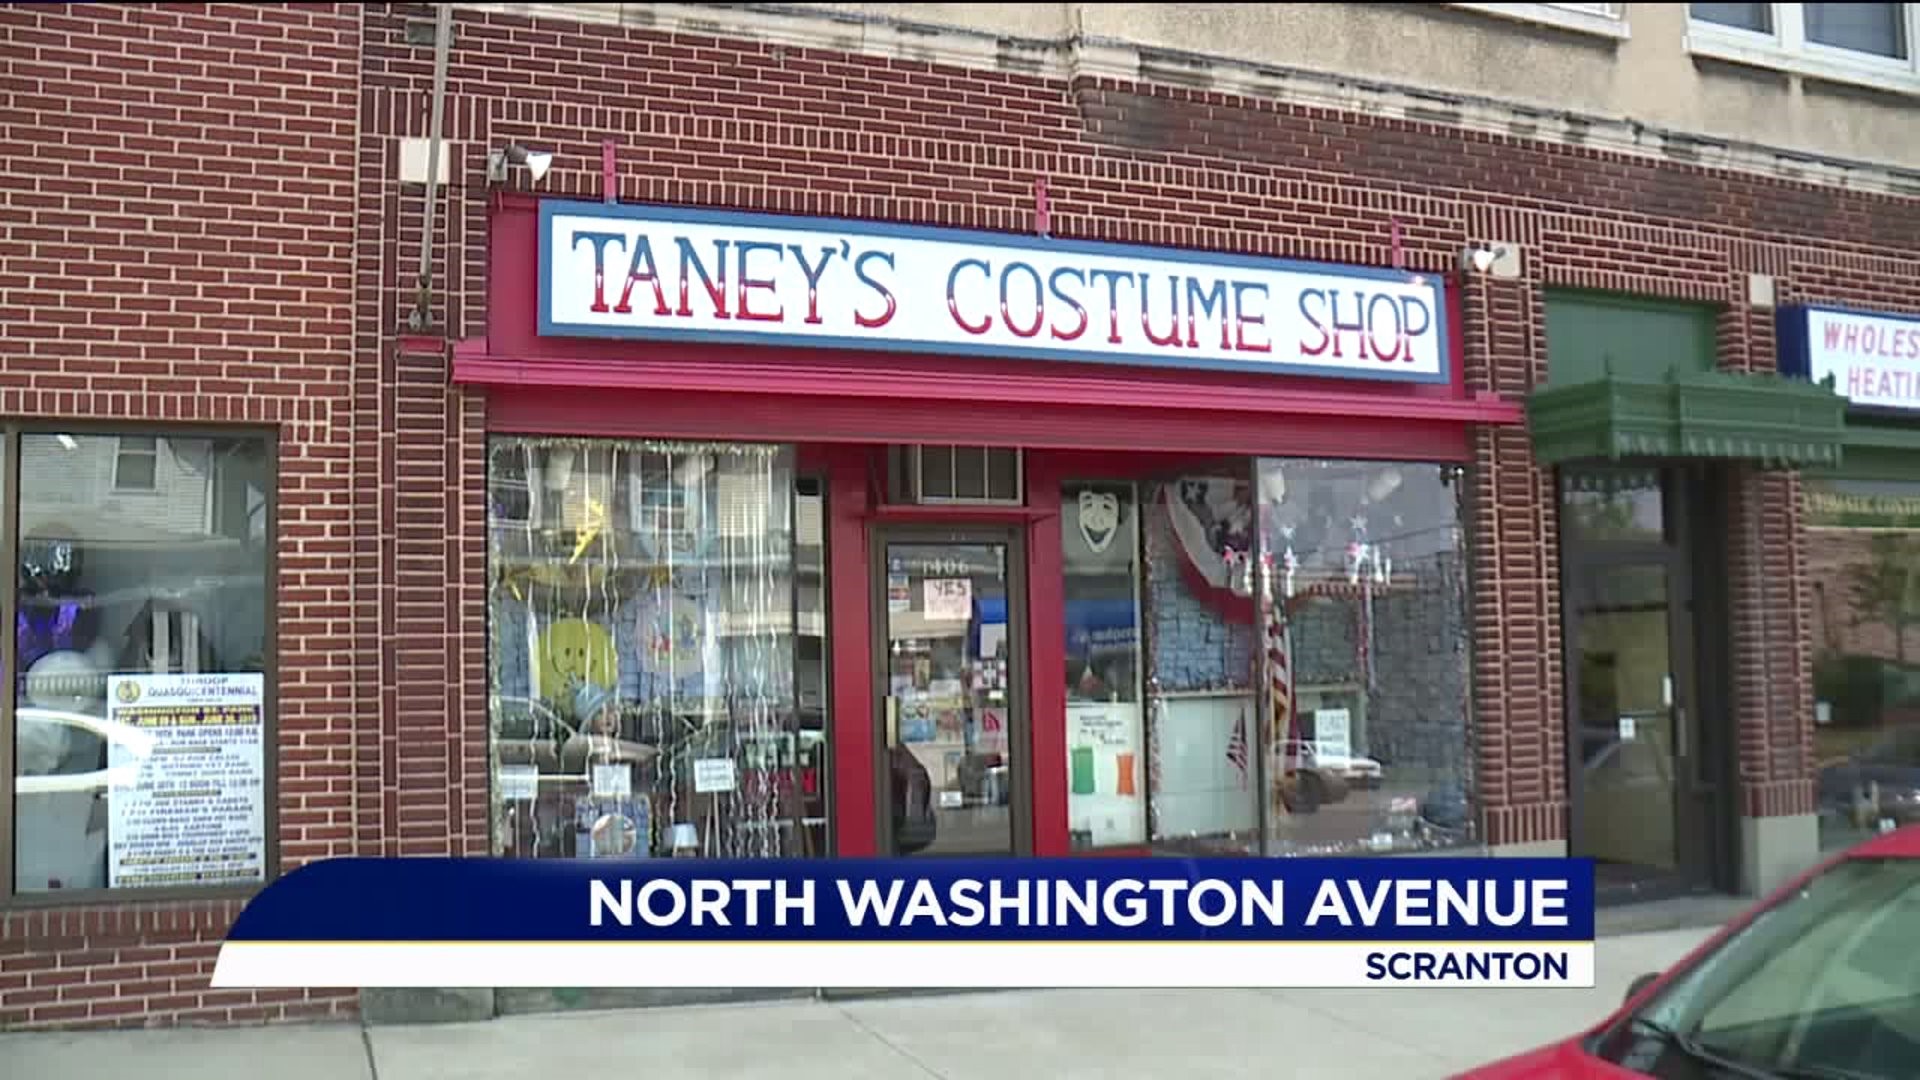 Scranton Costume Shop Gets a New Owner